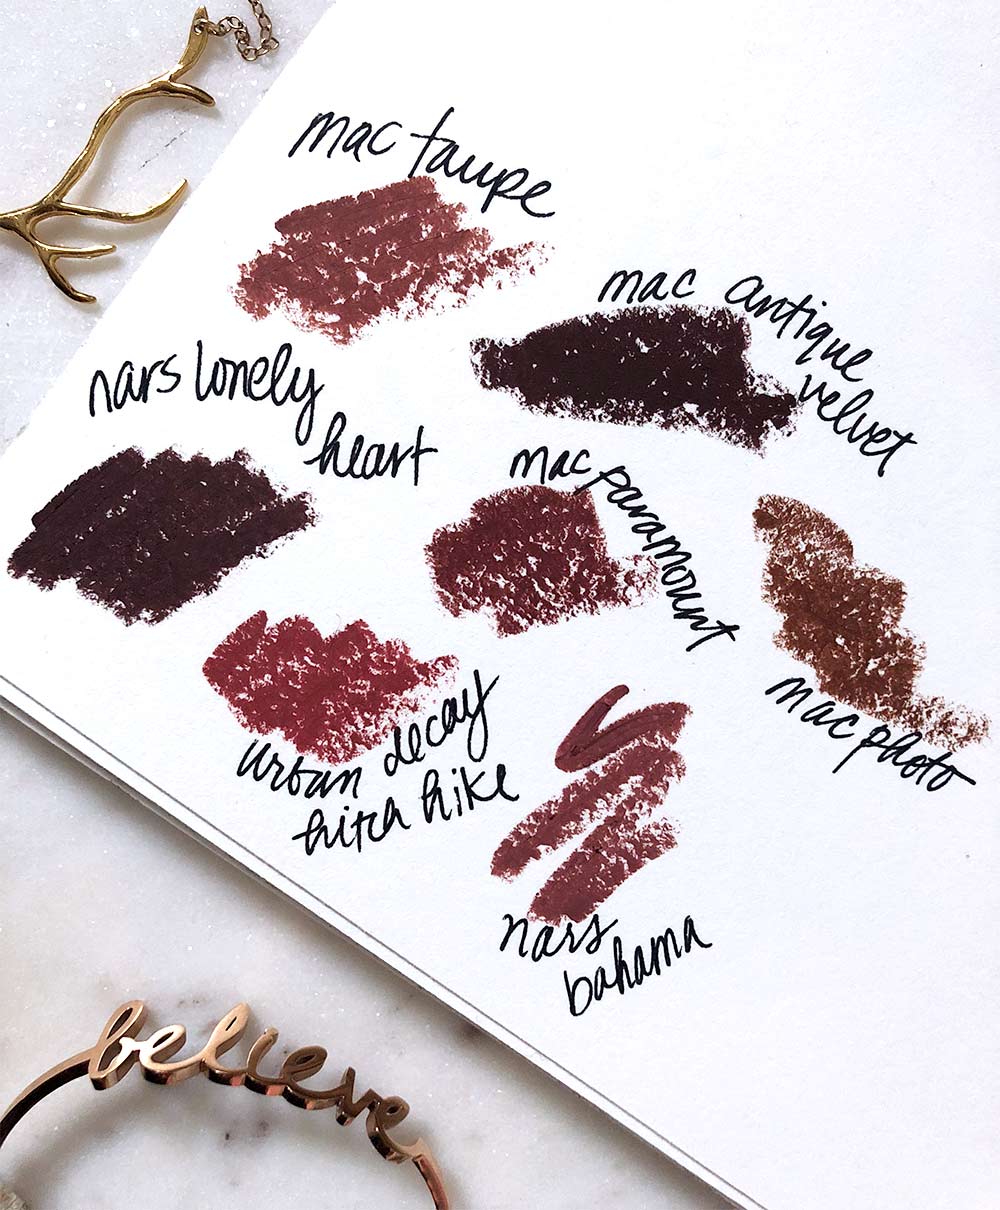 mac brown lipsticks